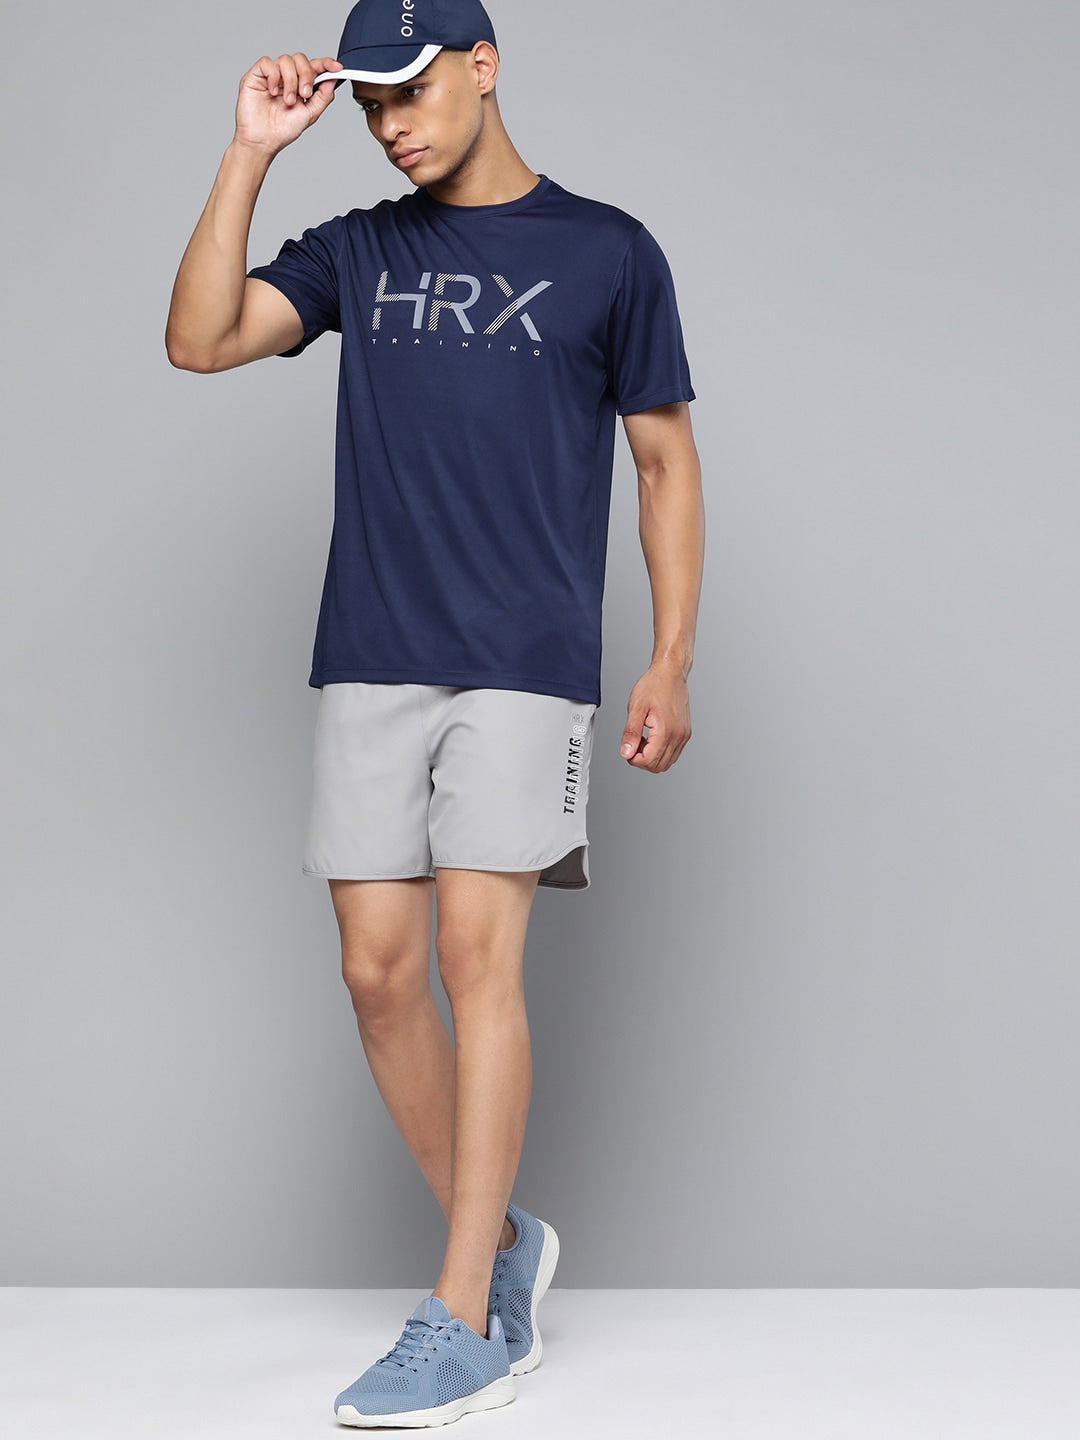 Buy HRX By Hrithik Roshan Women Grey & White Printed Running